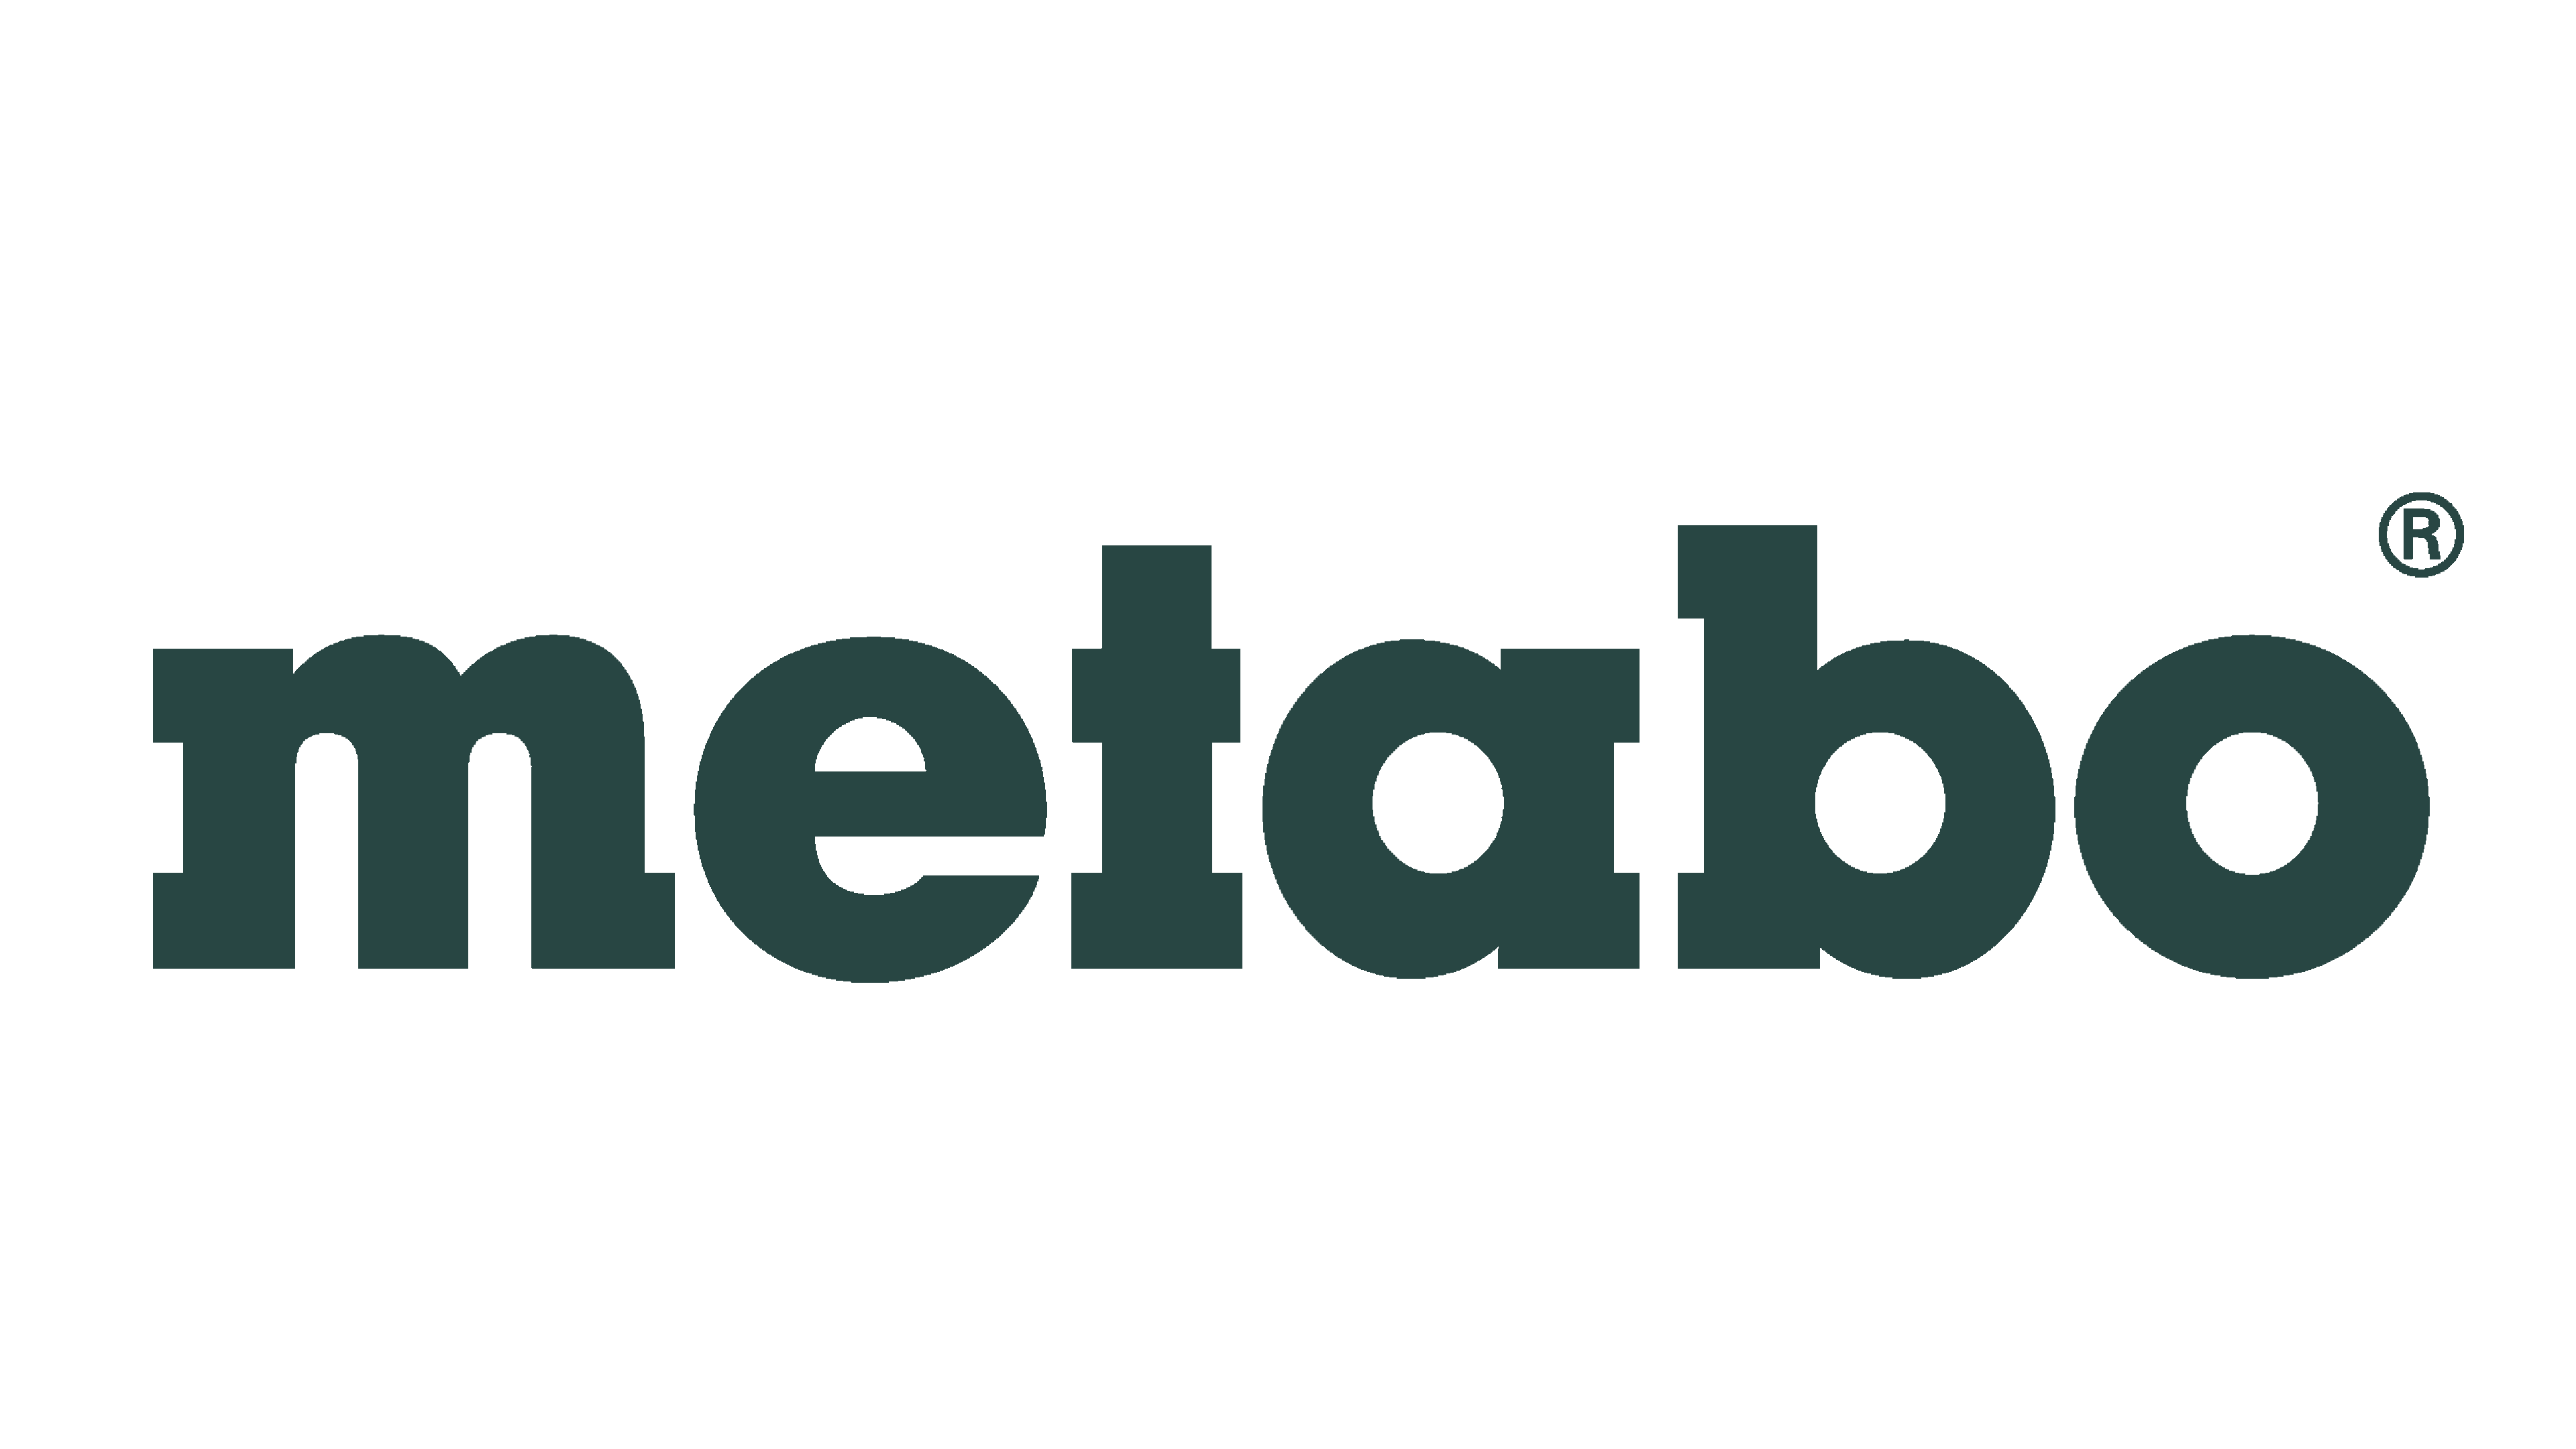 /_next/static/media/metabo.1e54e356.png